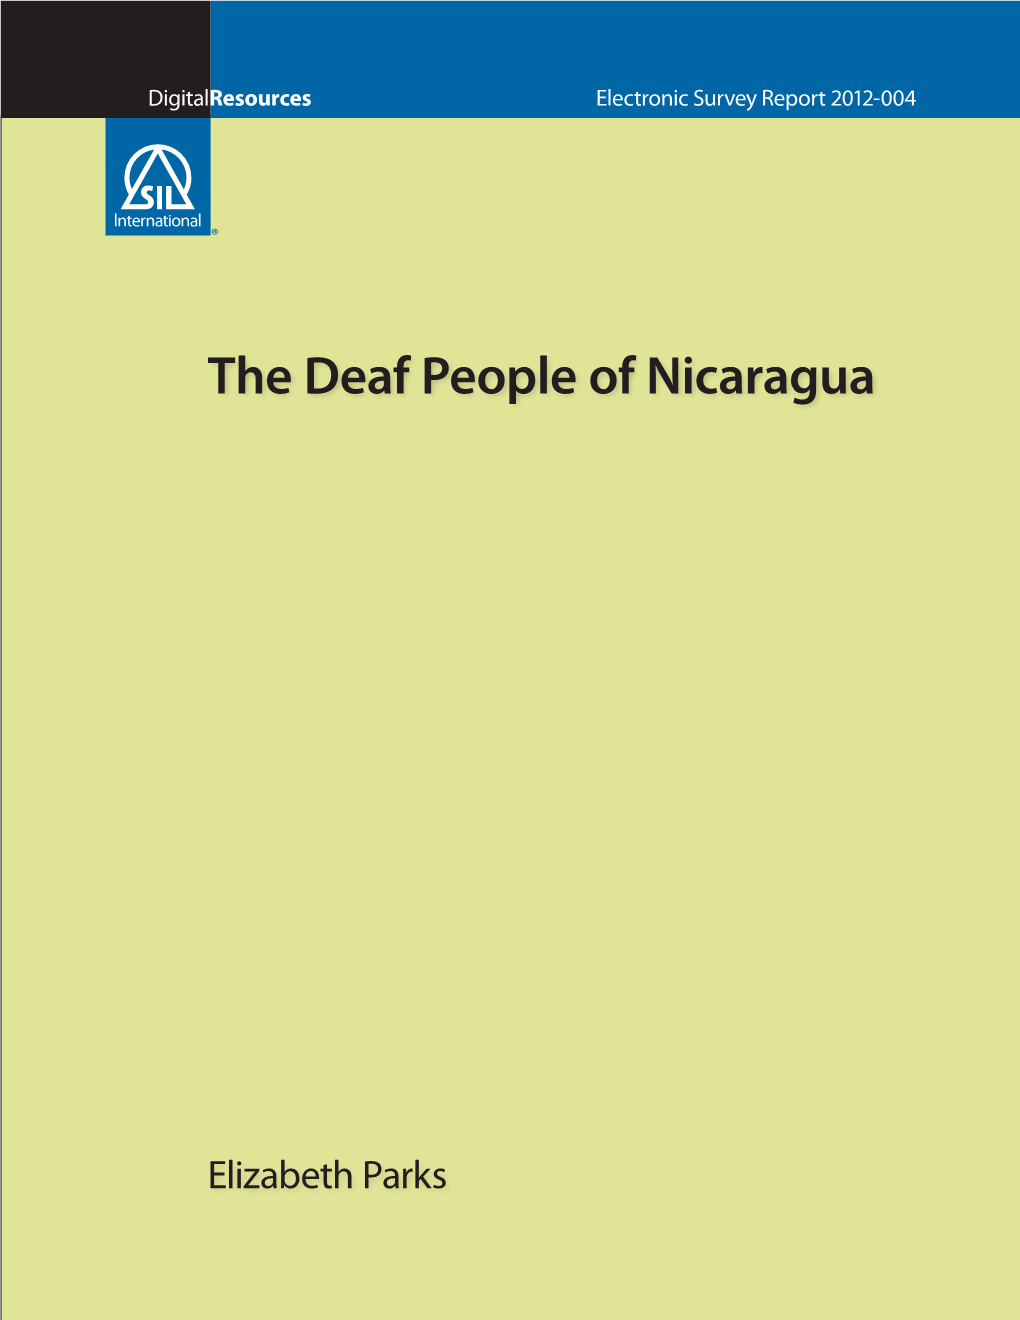 The Deaf People of Nicaragua